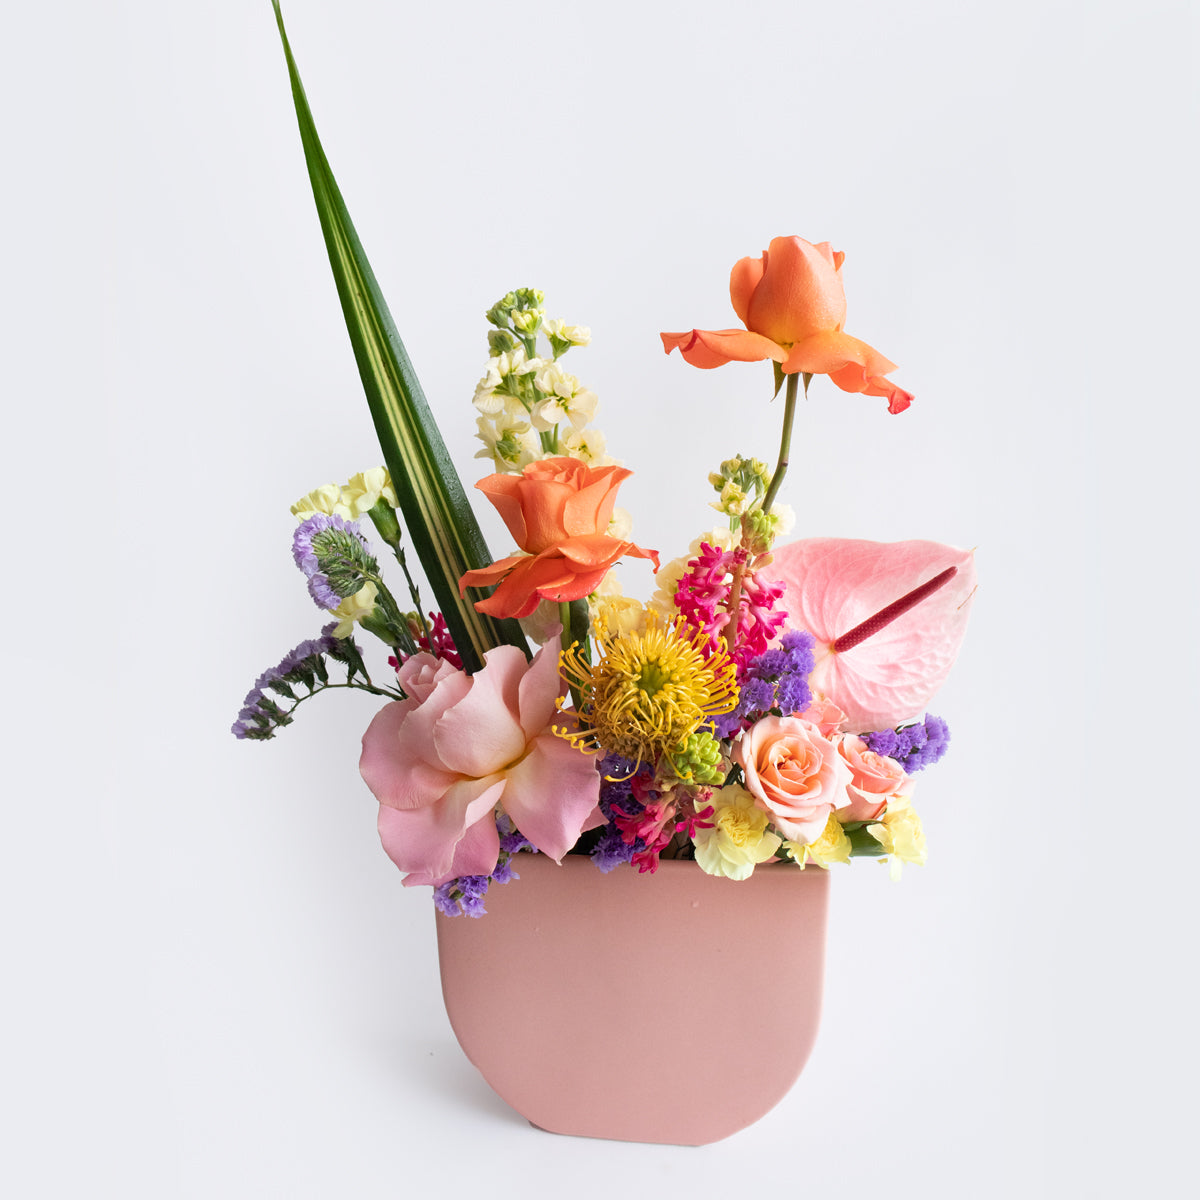 Designer's Choice Vase - Bright & Cheerful LB